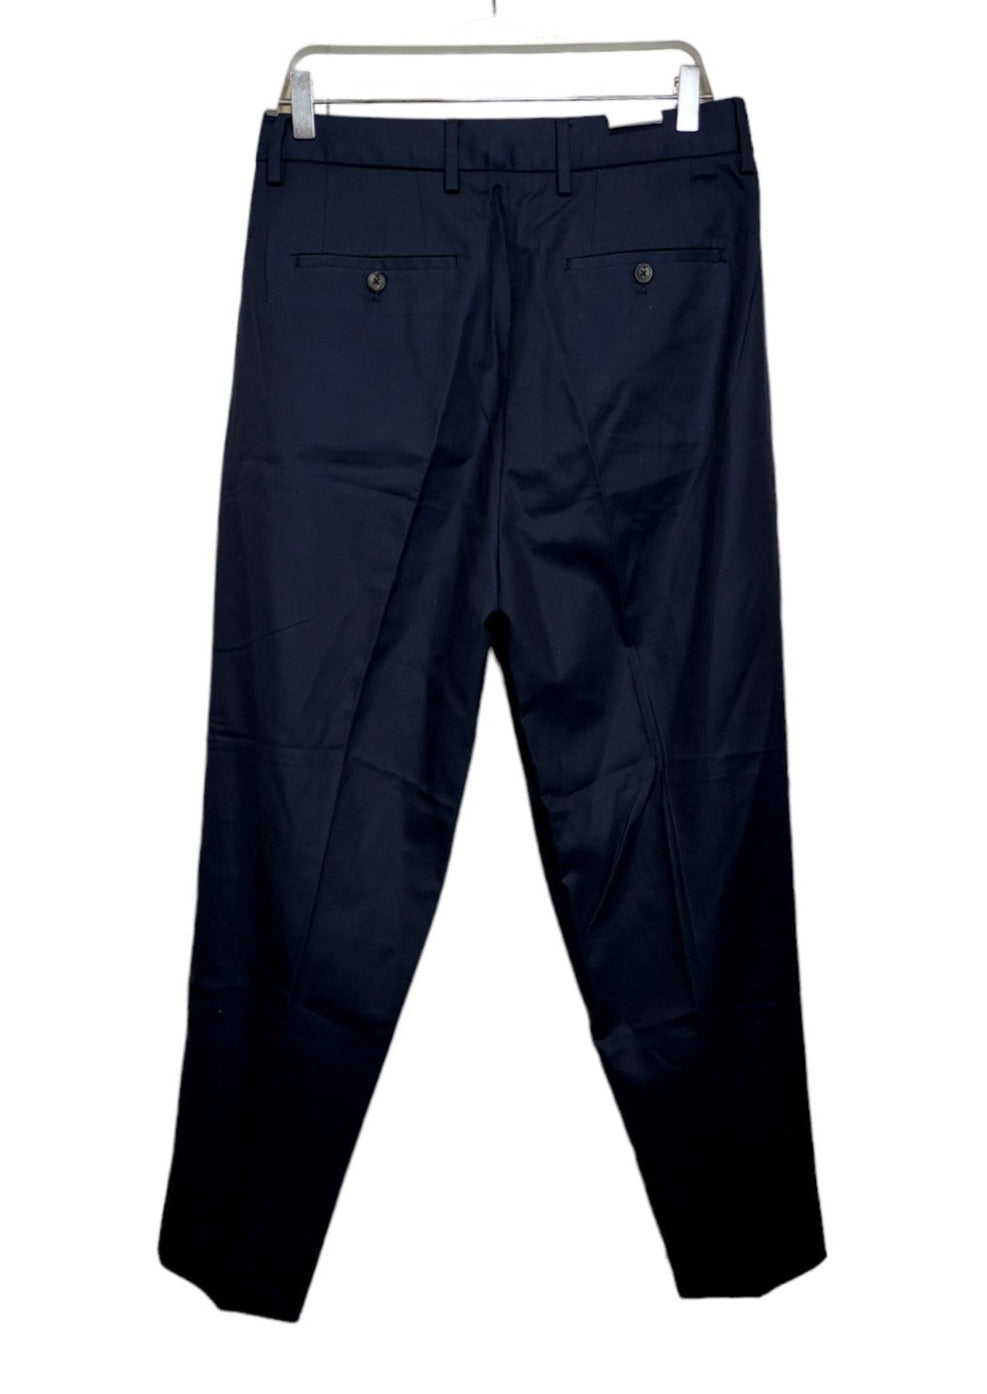 Stock, Ανδρικό Παντελόνι SCOTCH & SODA σε Σκούρο Μπλε Χρώμα (No 30)